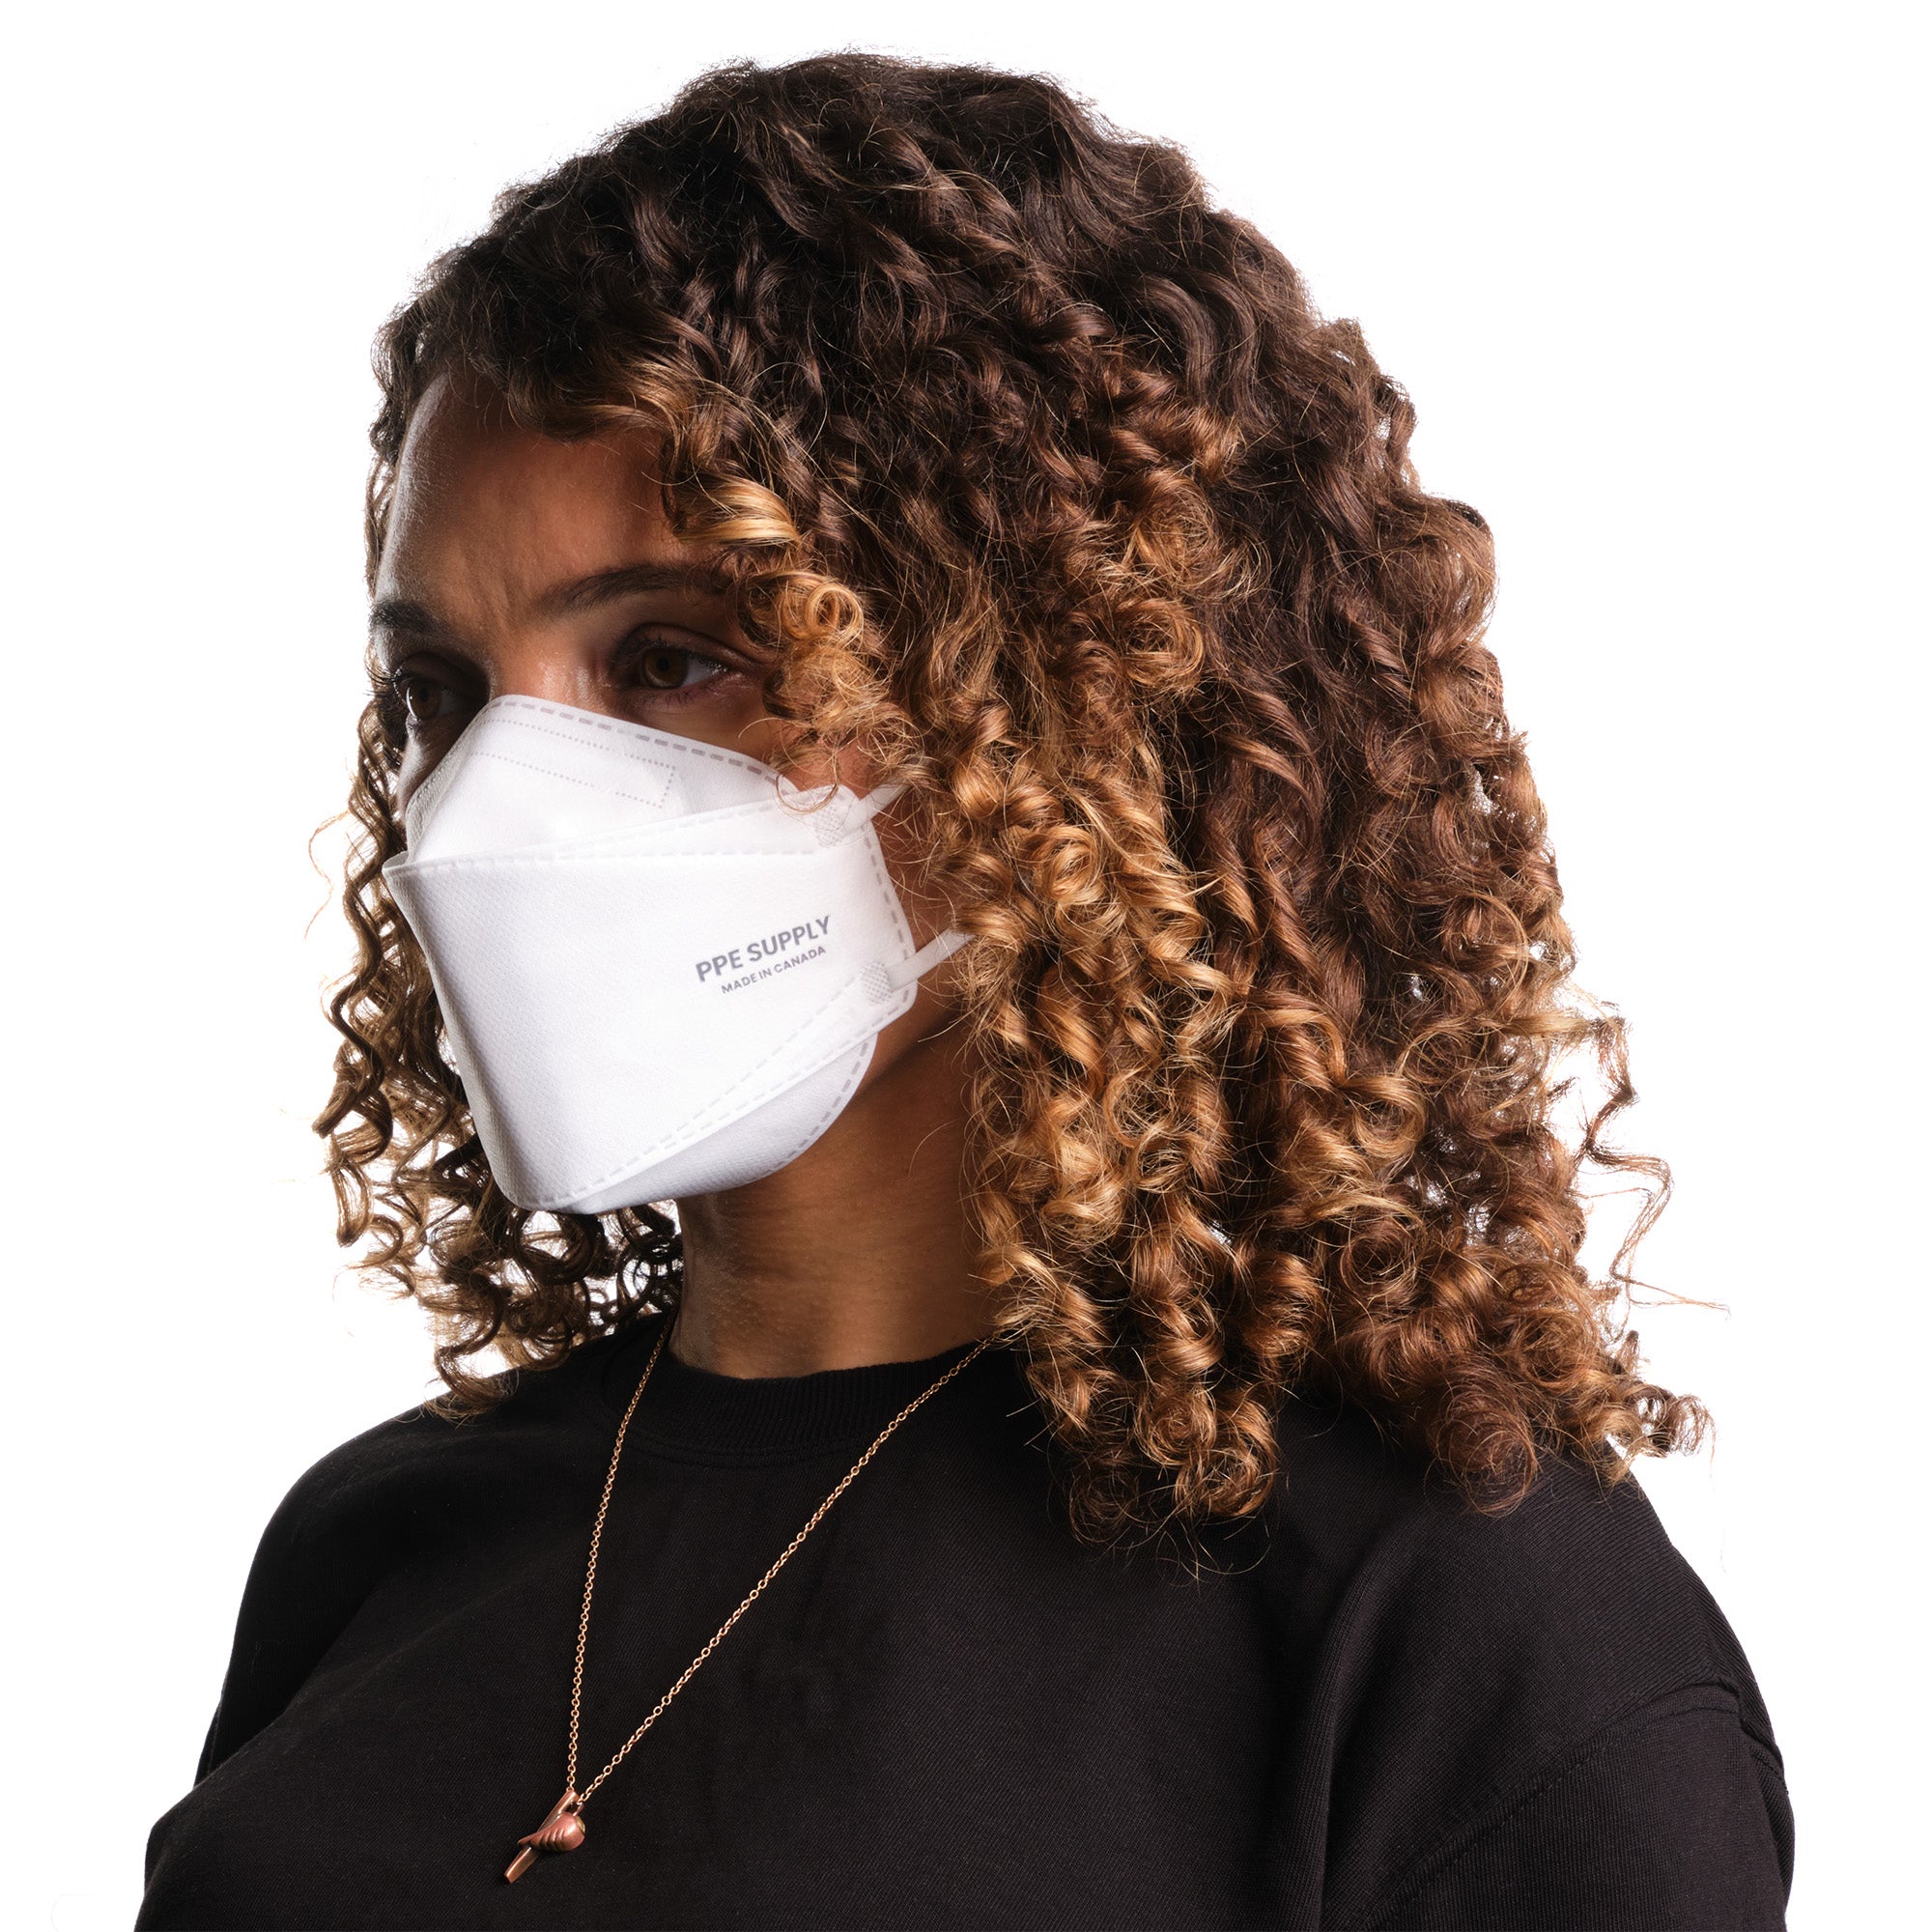 N95 Respirator Face Mask Made in Canada (Regular)